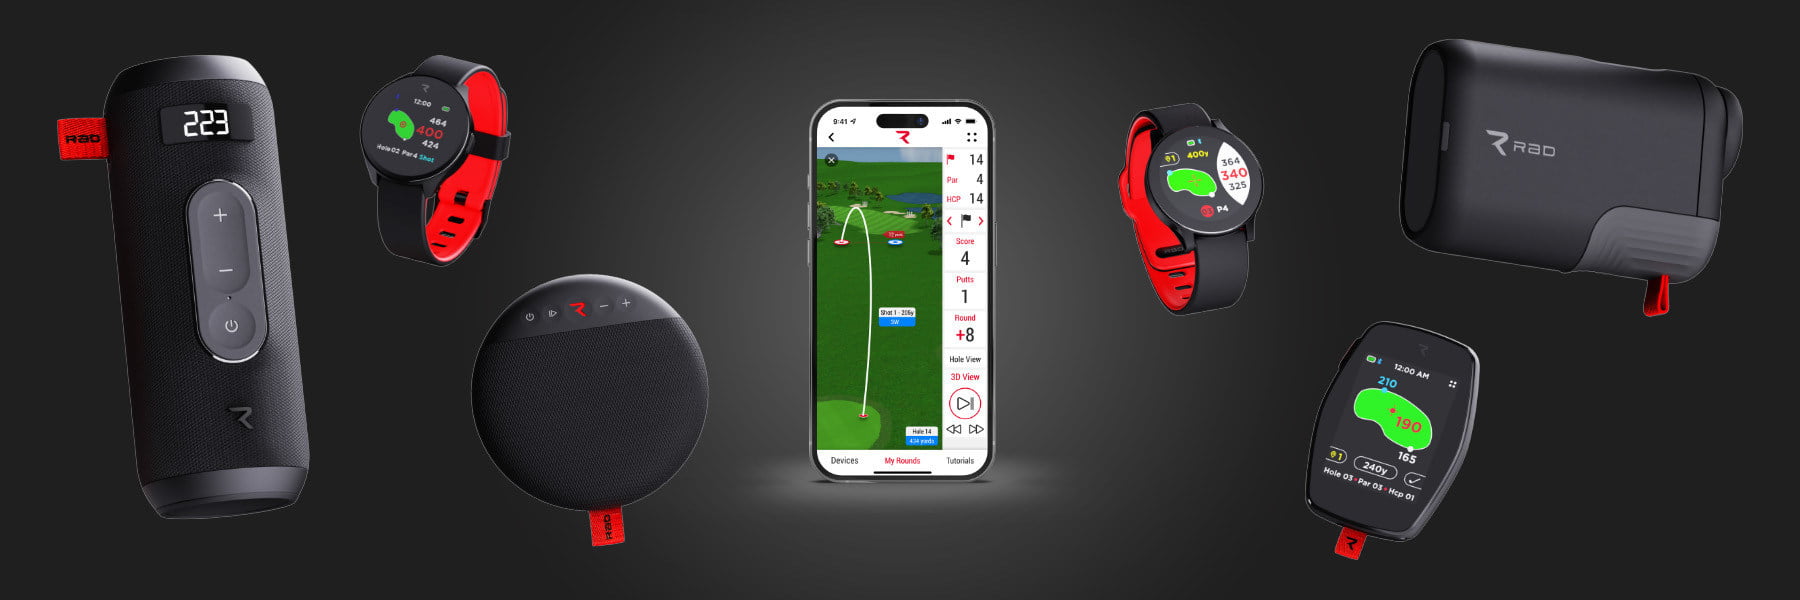 Rad Golf to Revolutionize Game [Equipment]